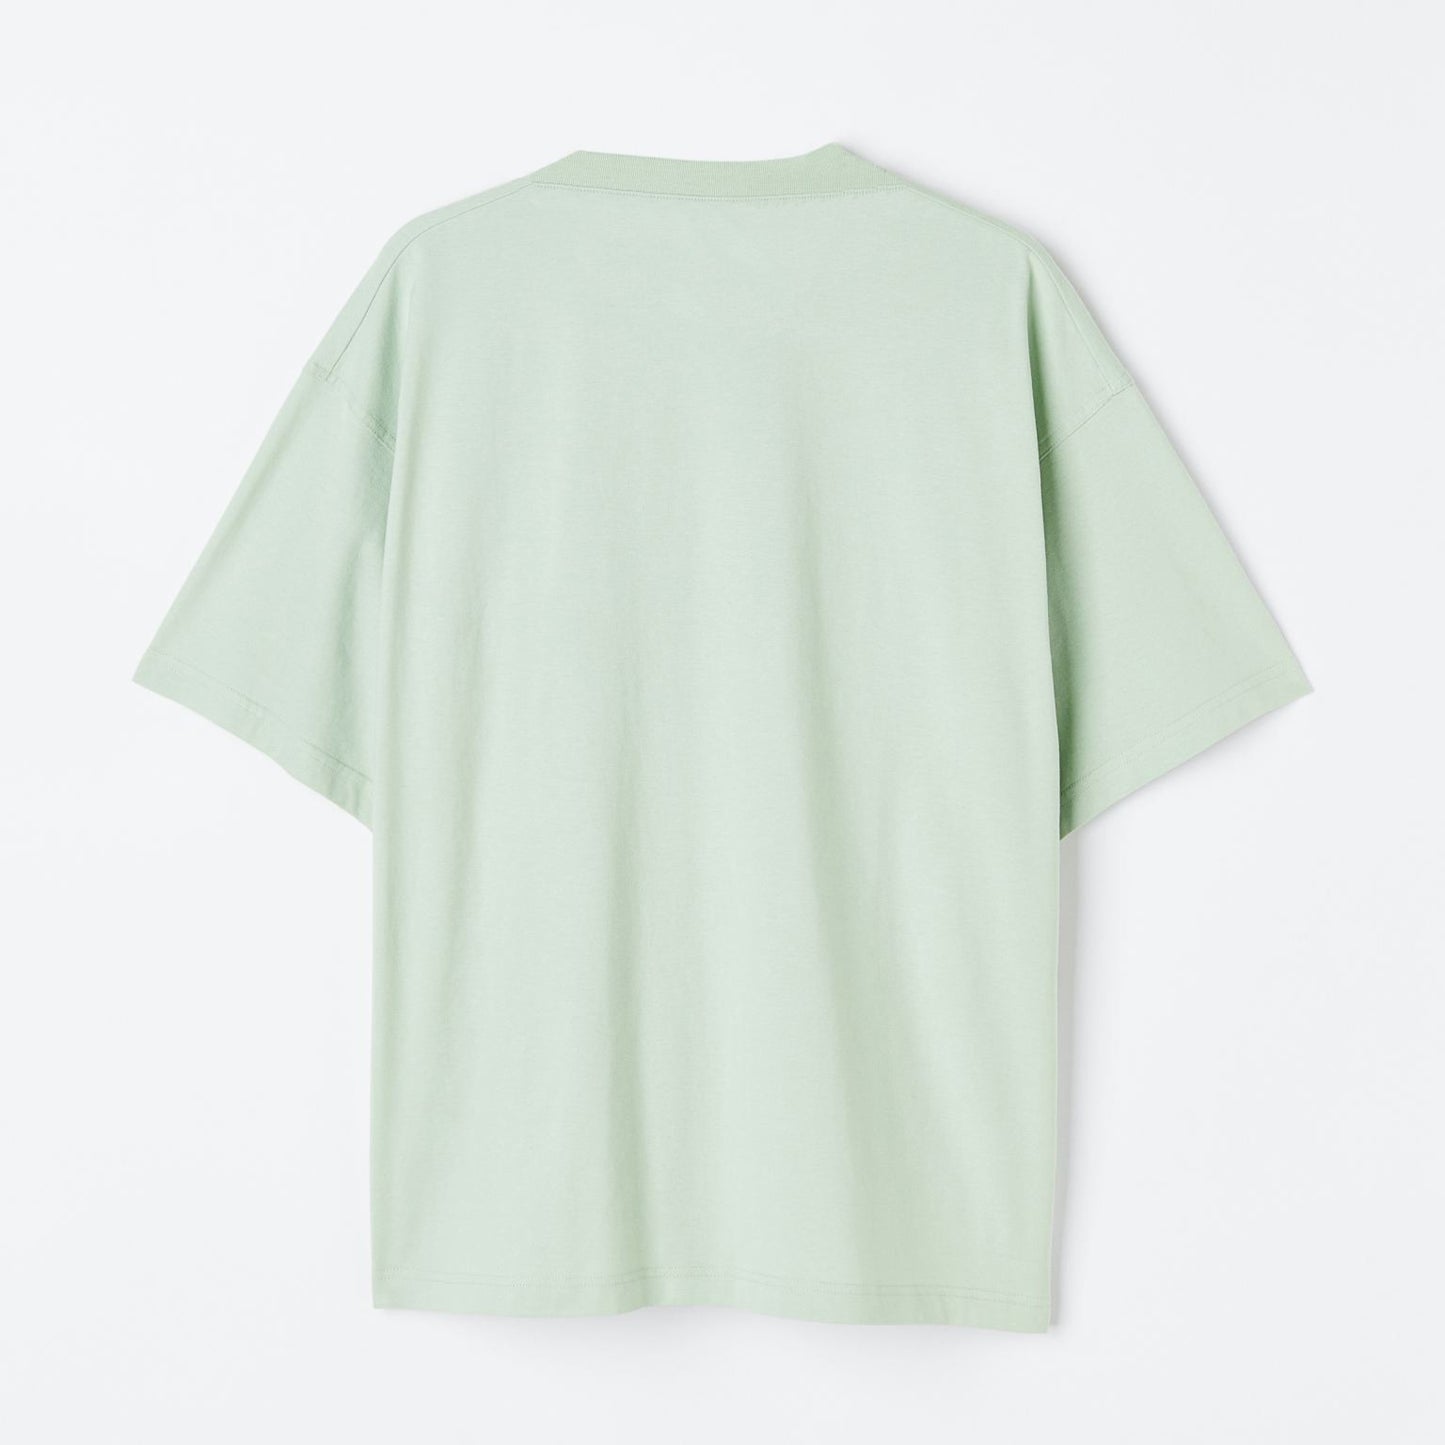 Veroconic Spaceship Printed Oversized Mint Green Cotton T-shirt